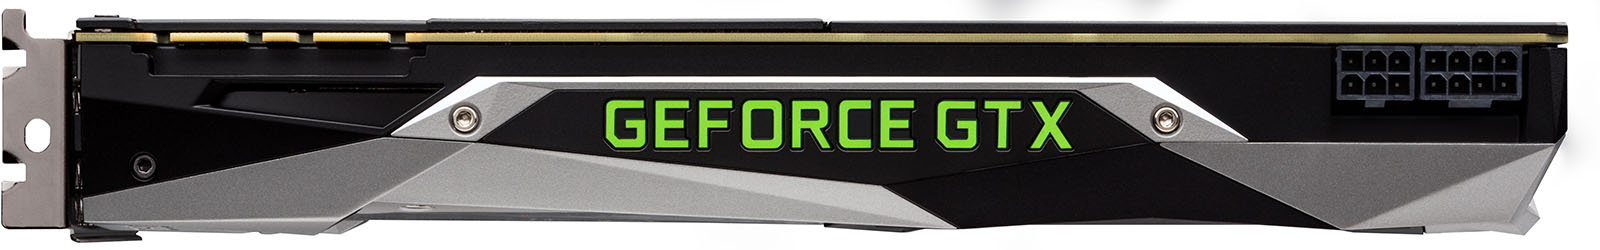 NVIDIA GeForce GTX 1080 Ti Review: A Look At 4K & Ultrawide Gaming –  Techgage